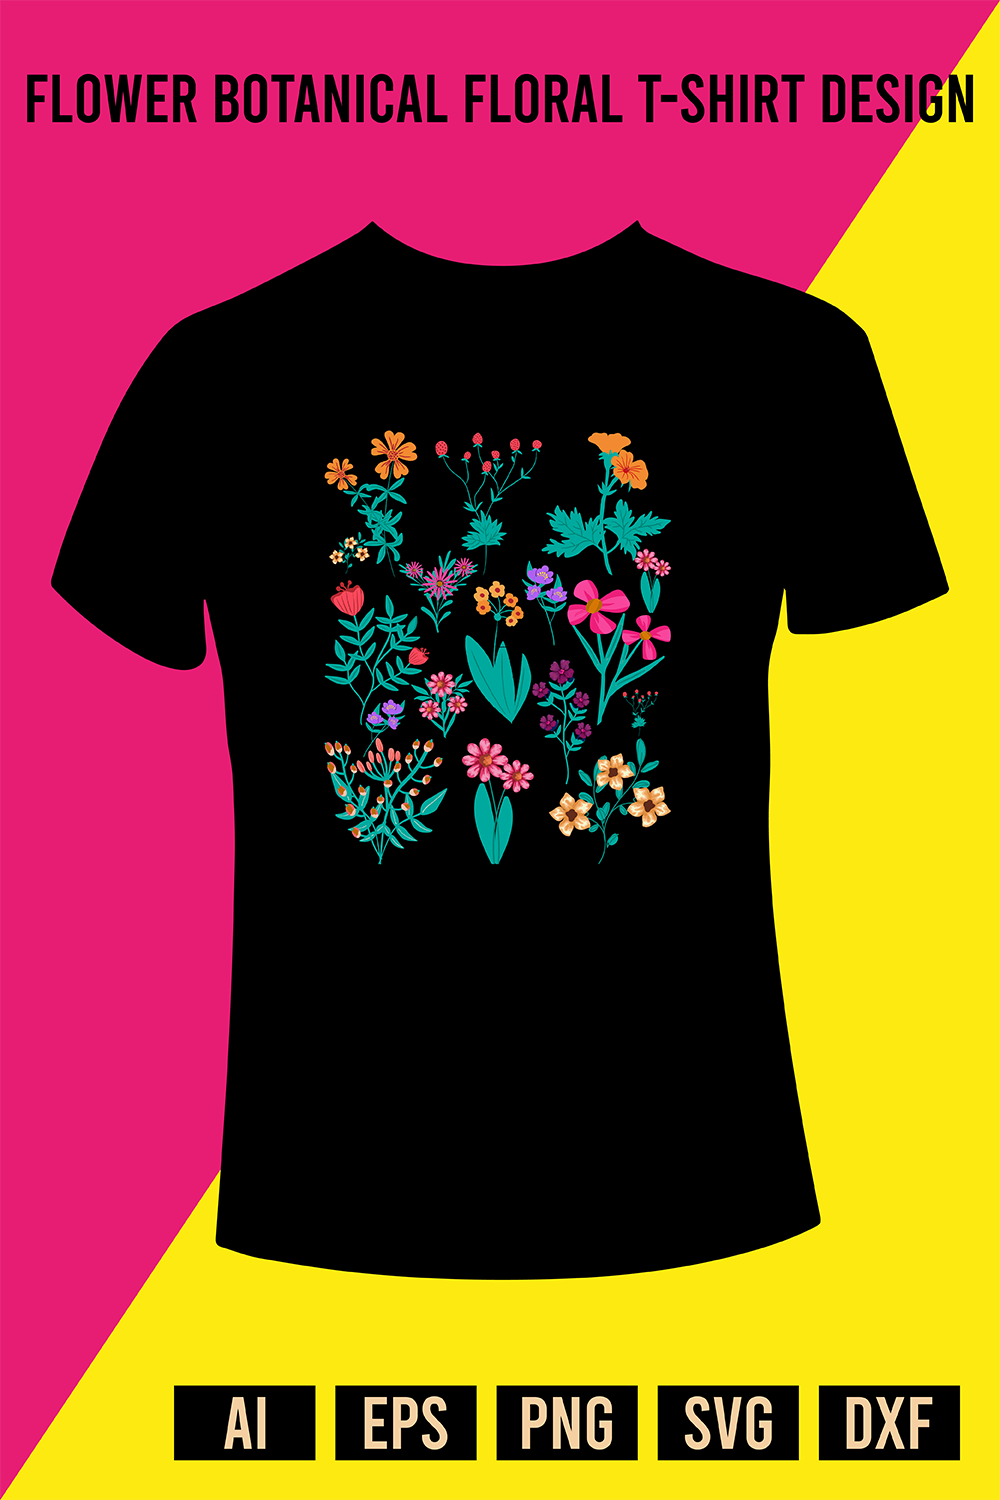 Flower Botanical Floral T-Shirt Design pinterest preview image.